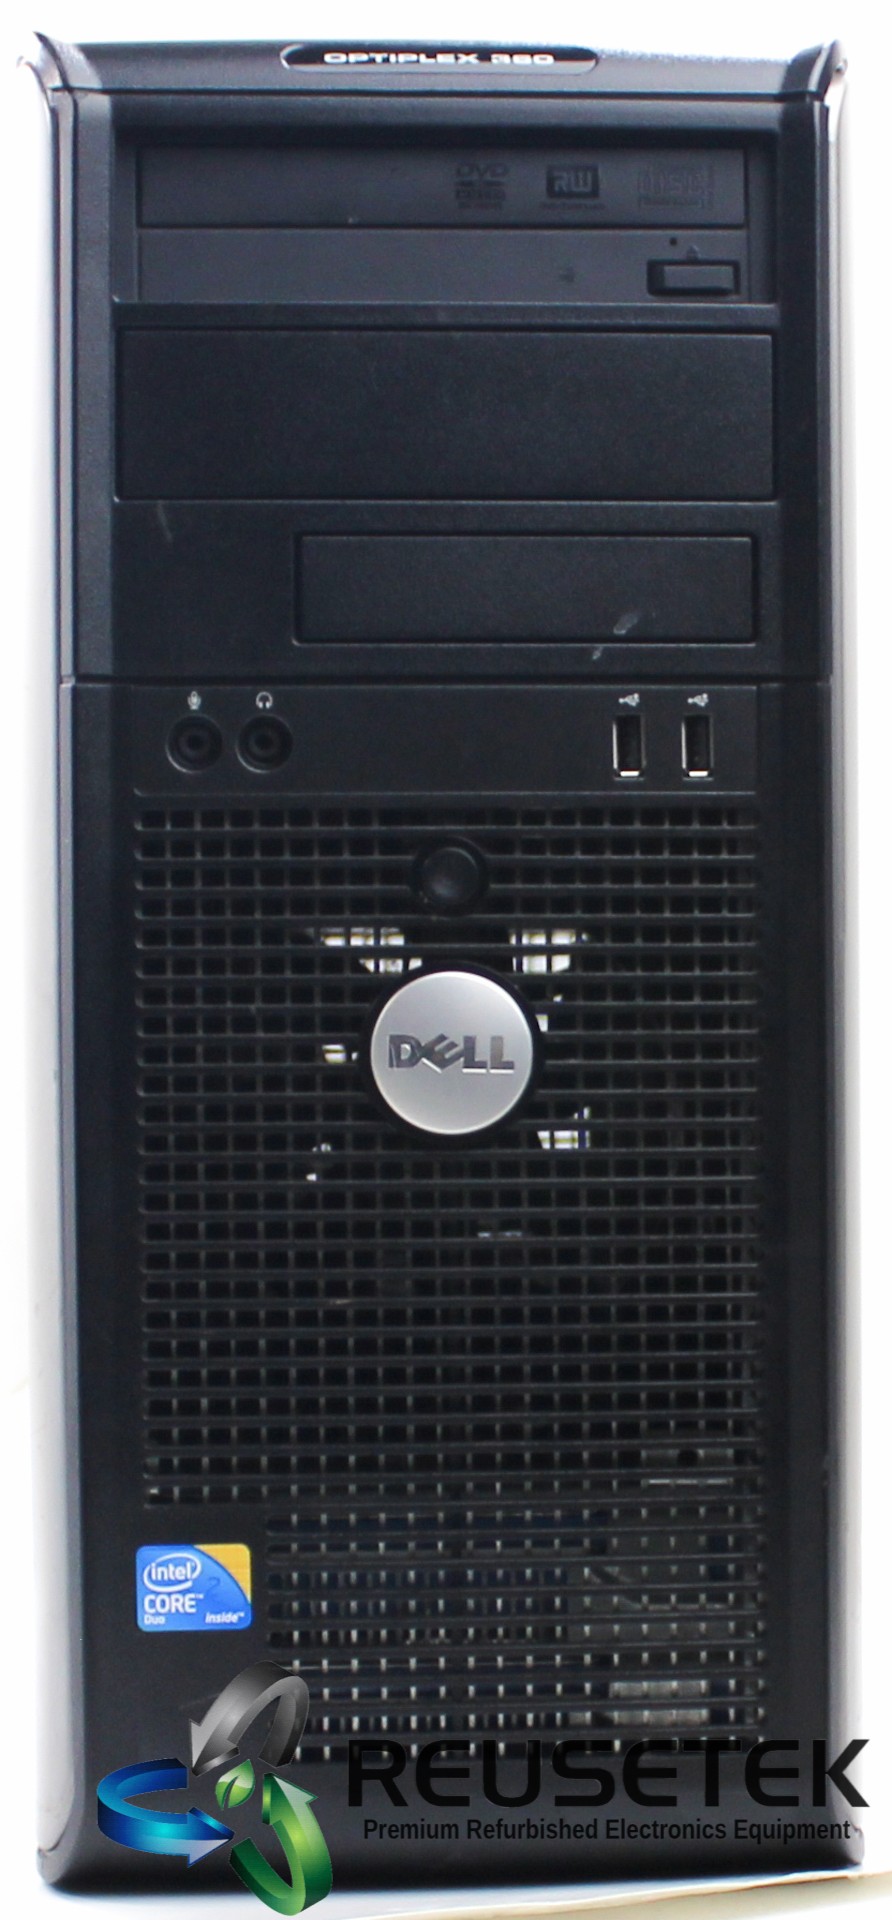 CDH5086-Dell Optiplex 360 DCSM Desktop PC-image